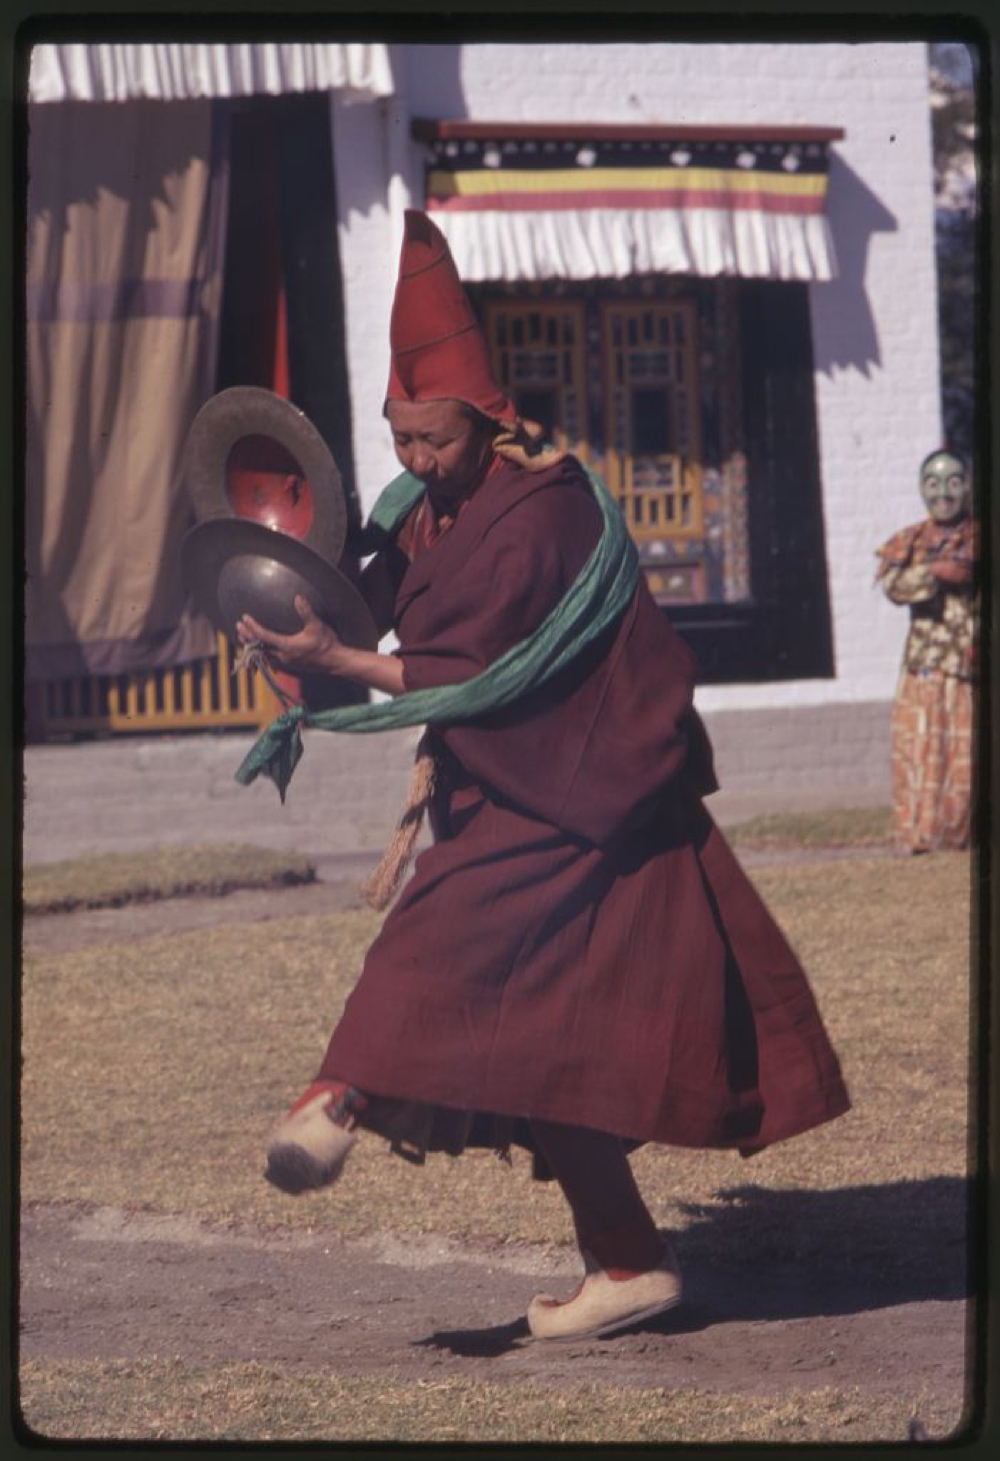 Musician lama during ceremonial dances using cymbals